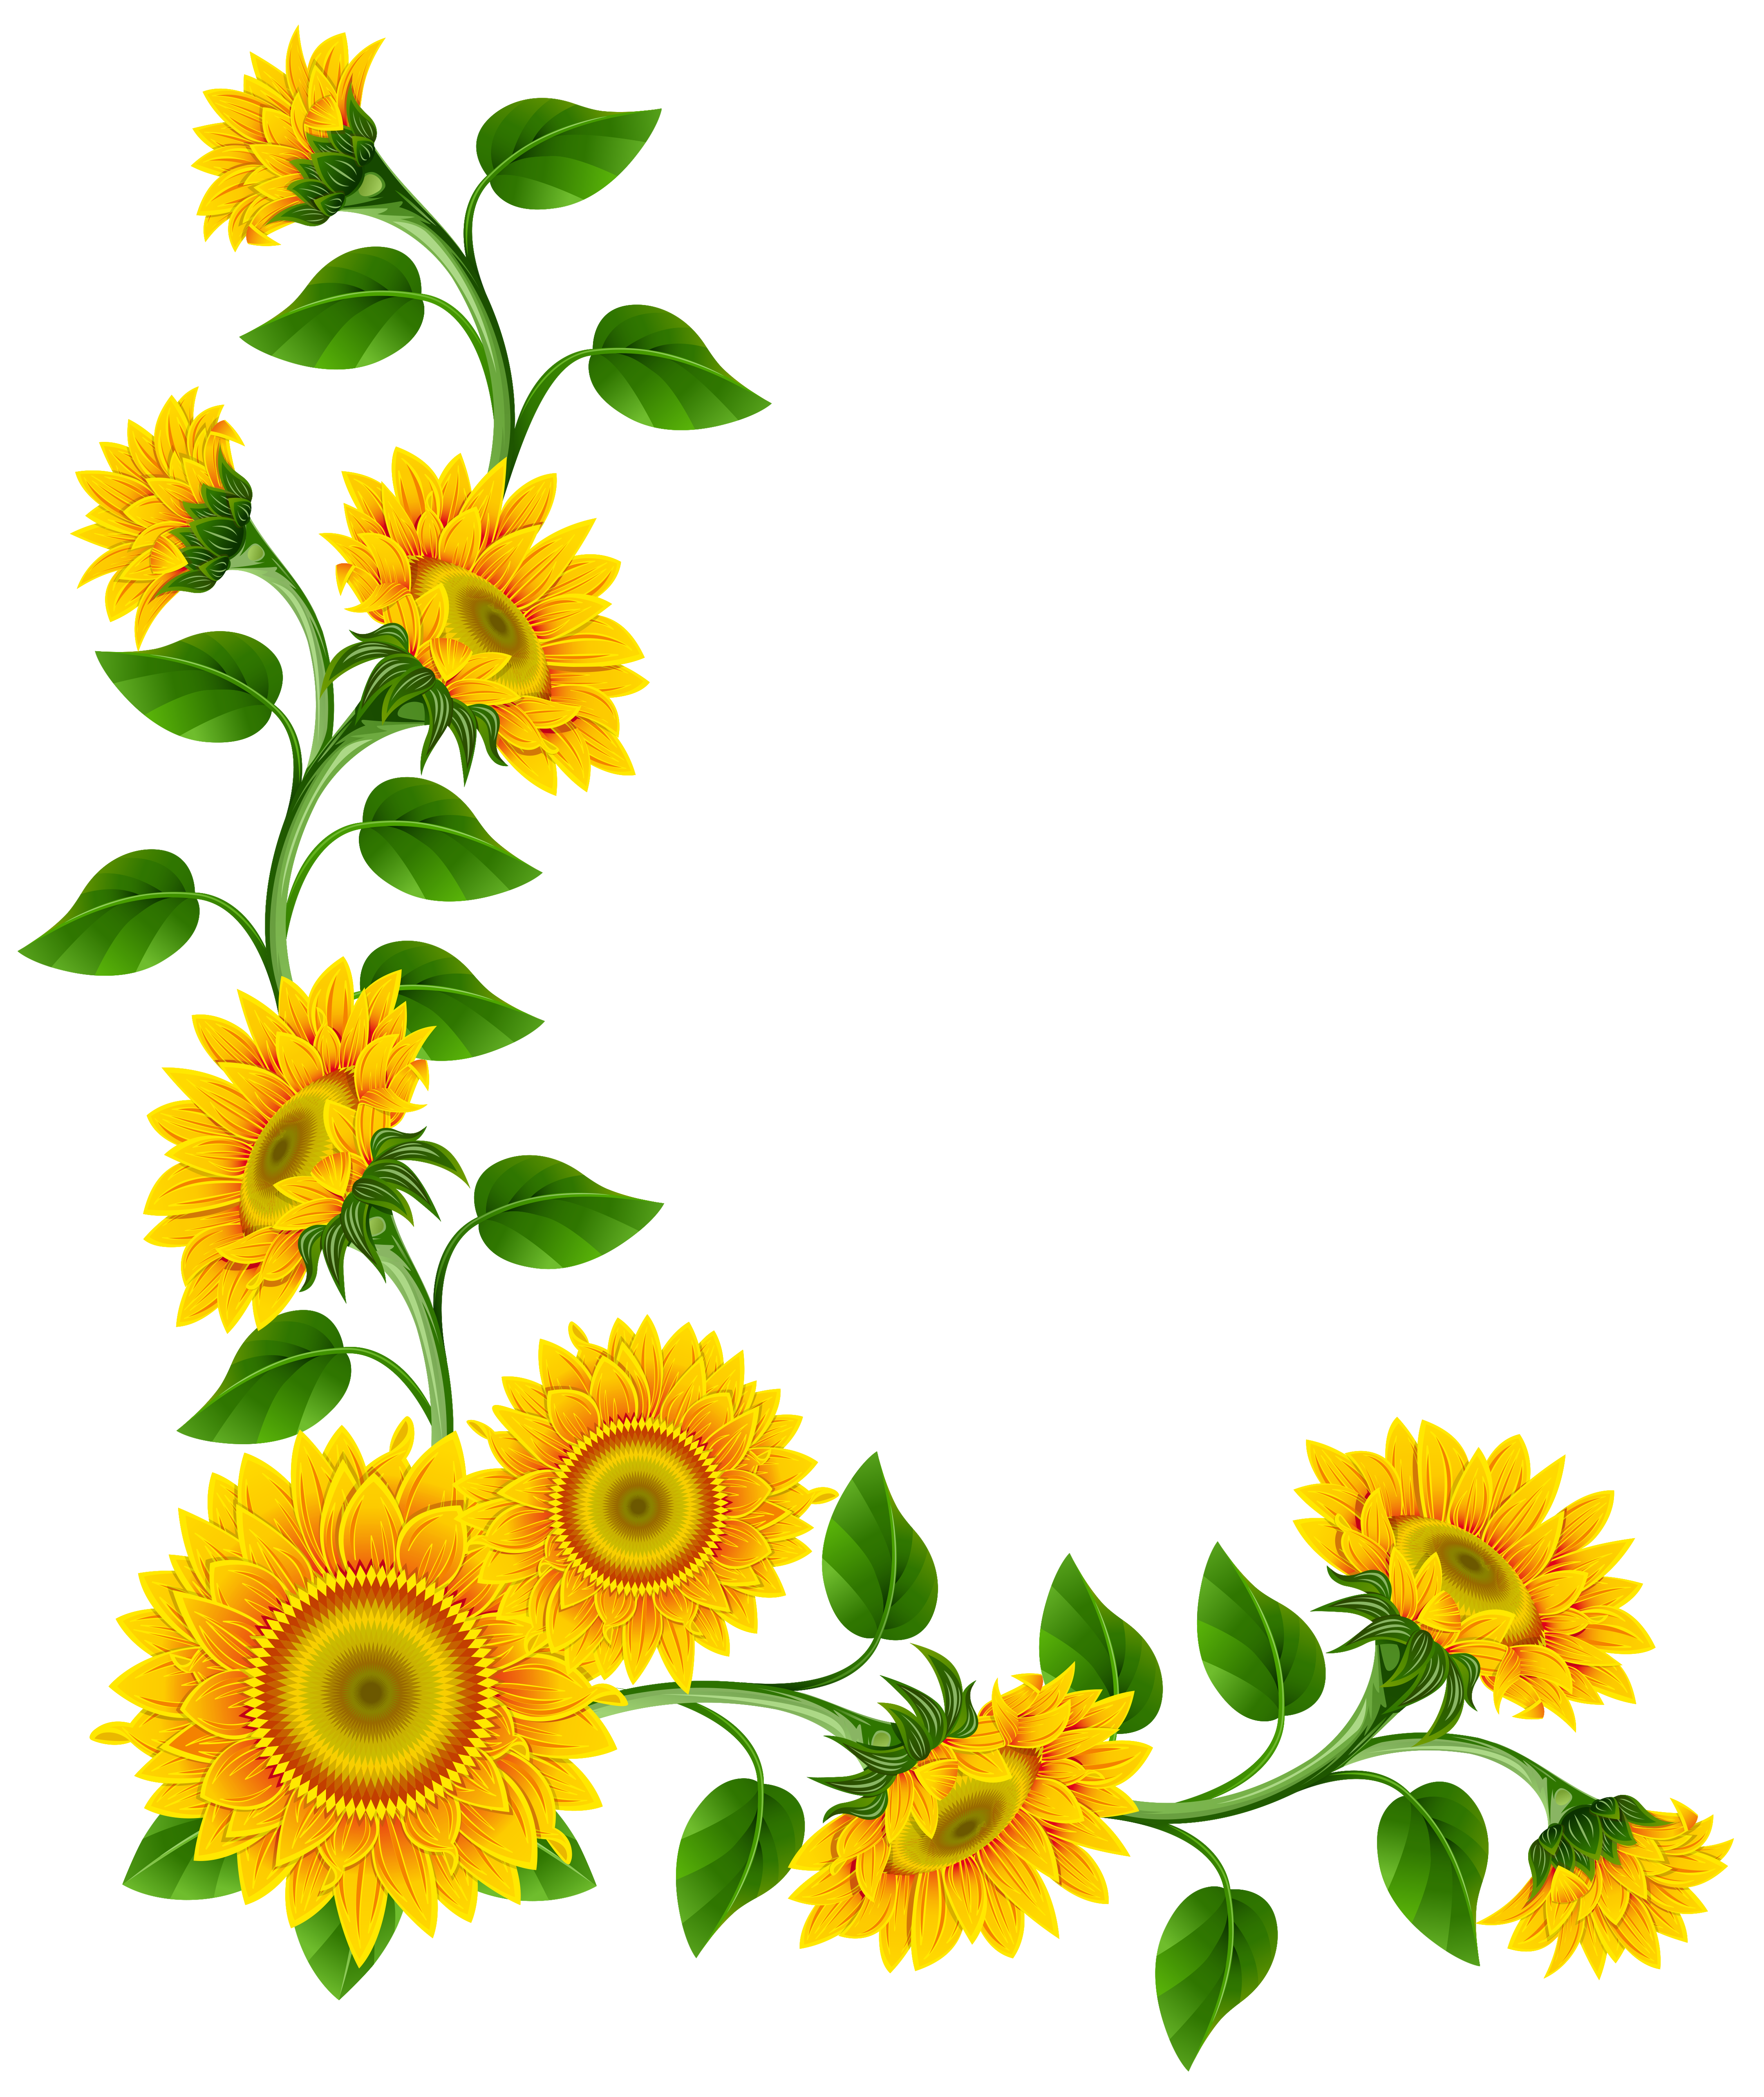 Flower clipart sunflower. Border decoration png image